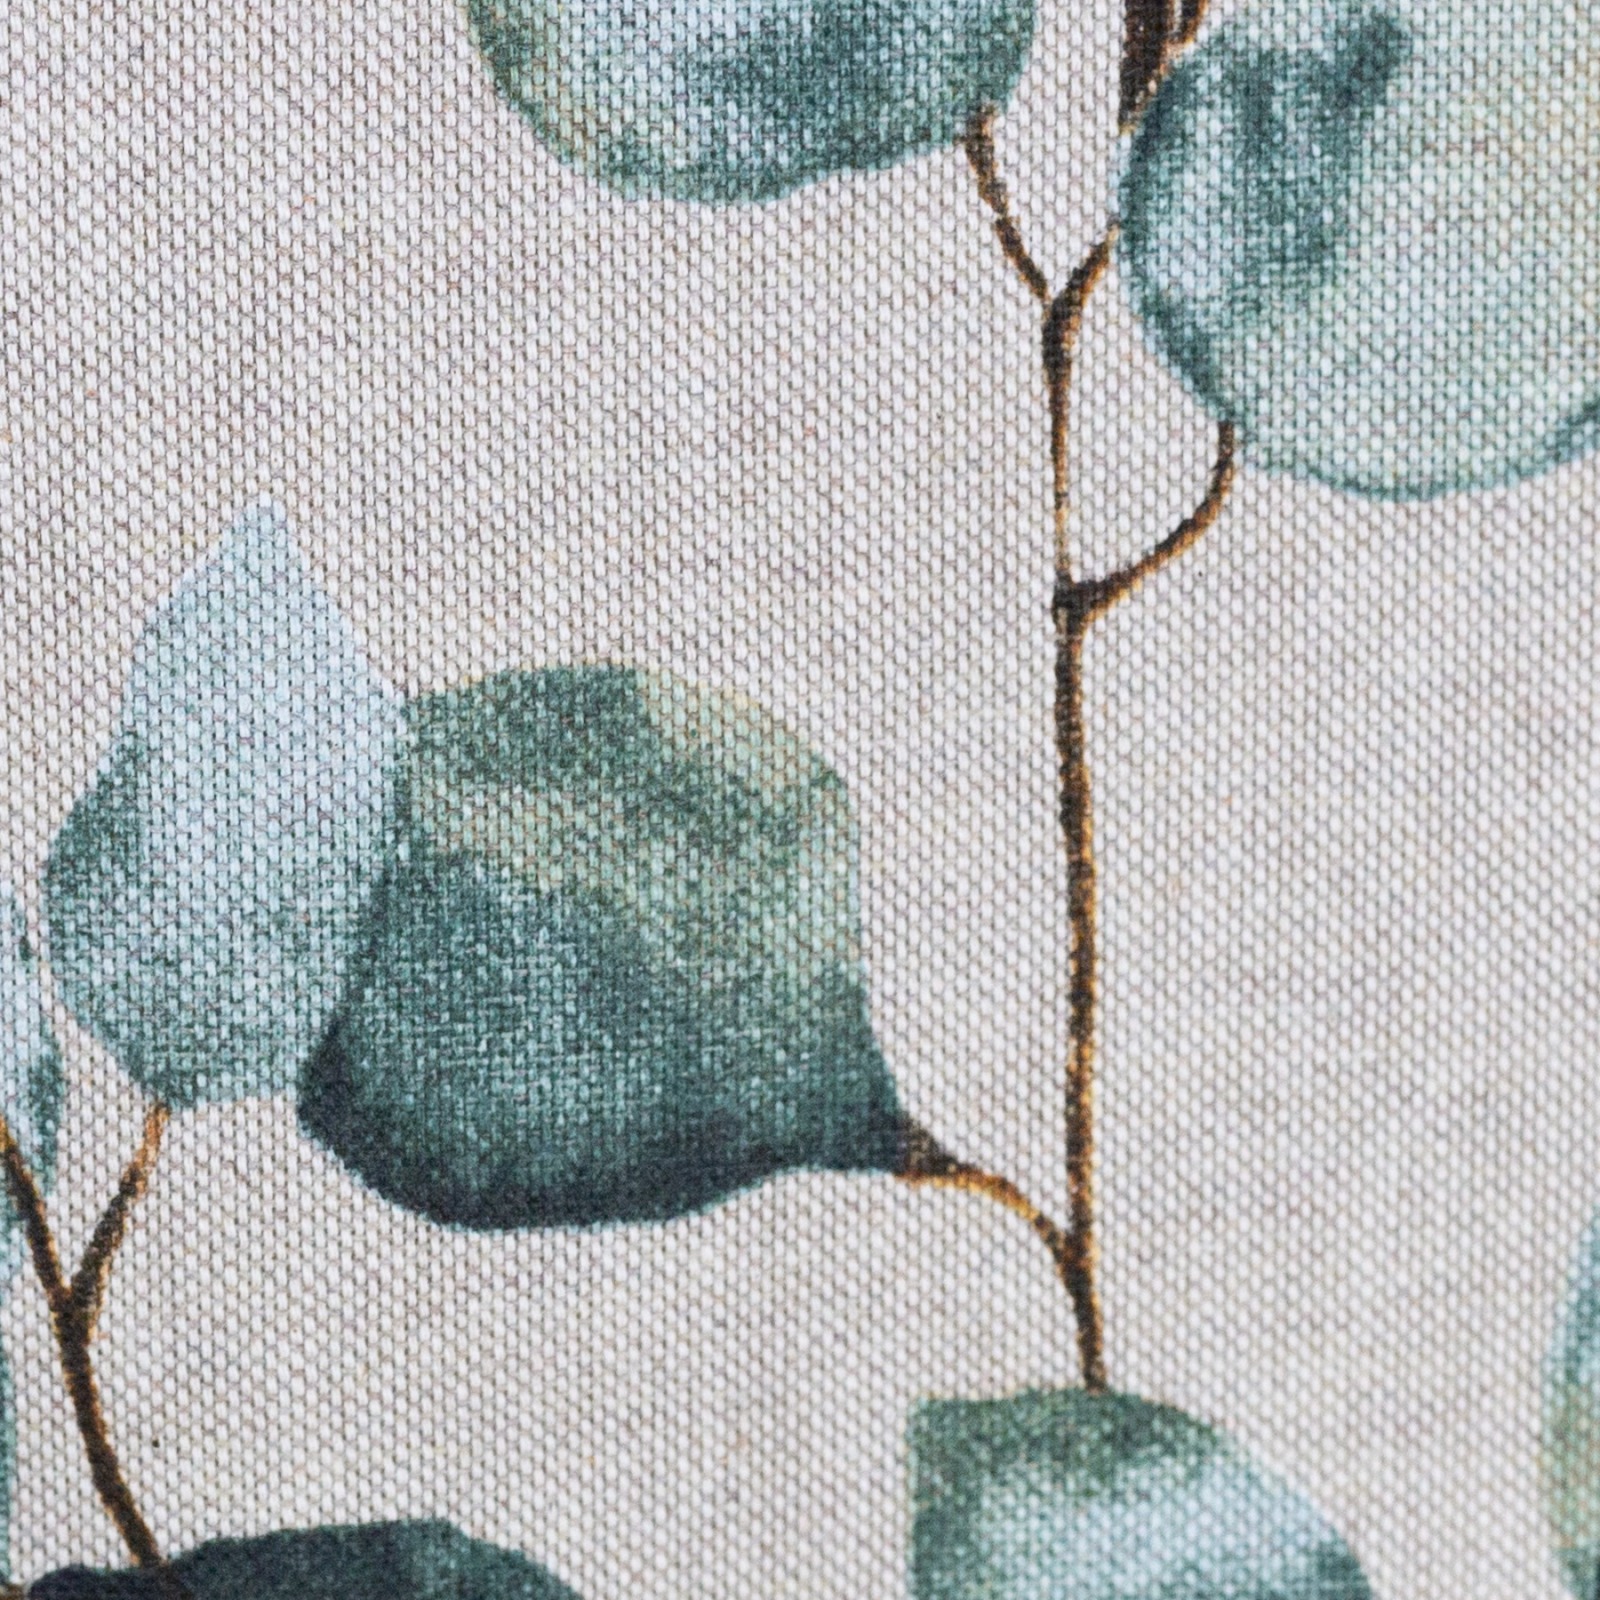 05m Canvas Emma Leinenoptik Blätter Zweige Eukalyptus natur grün